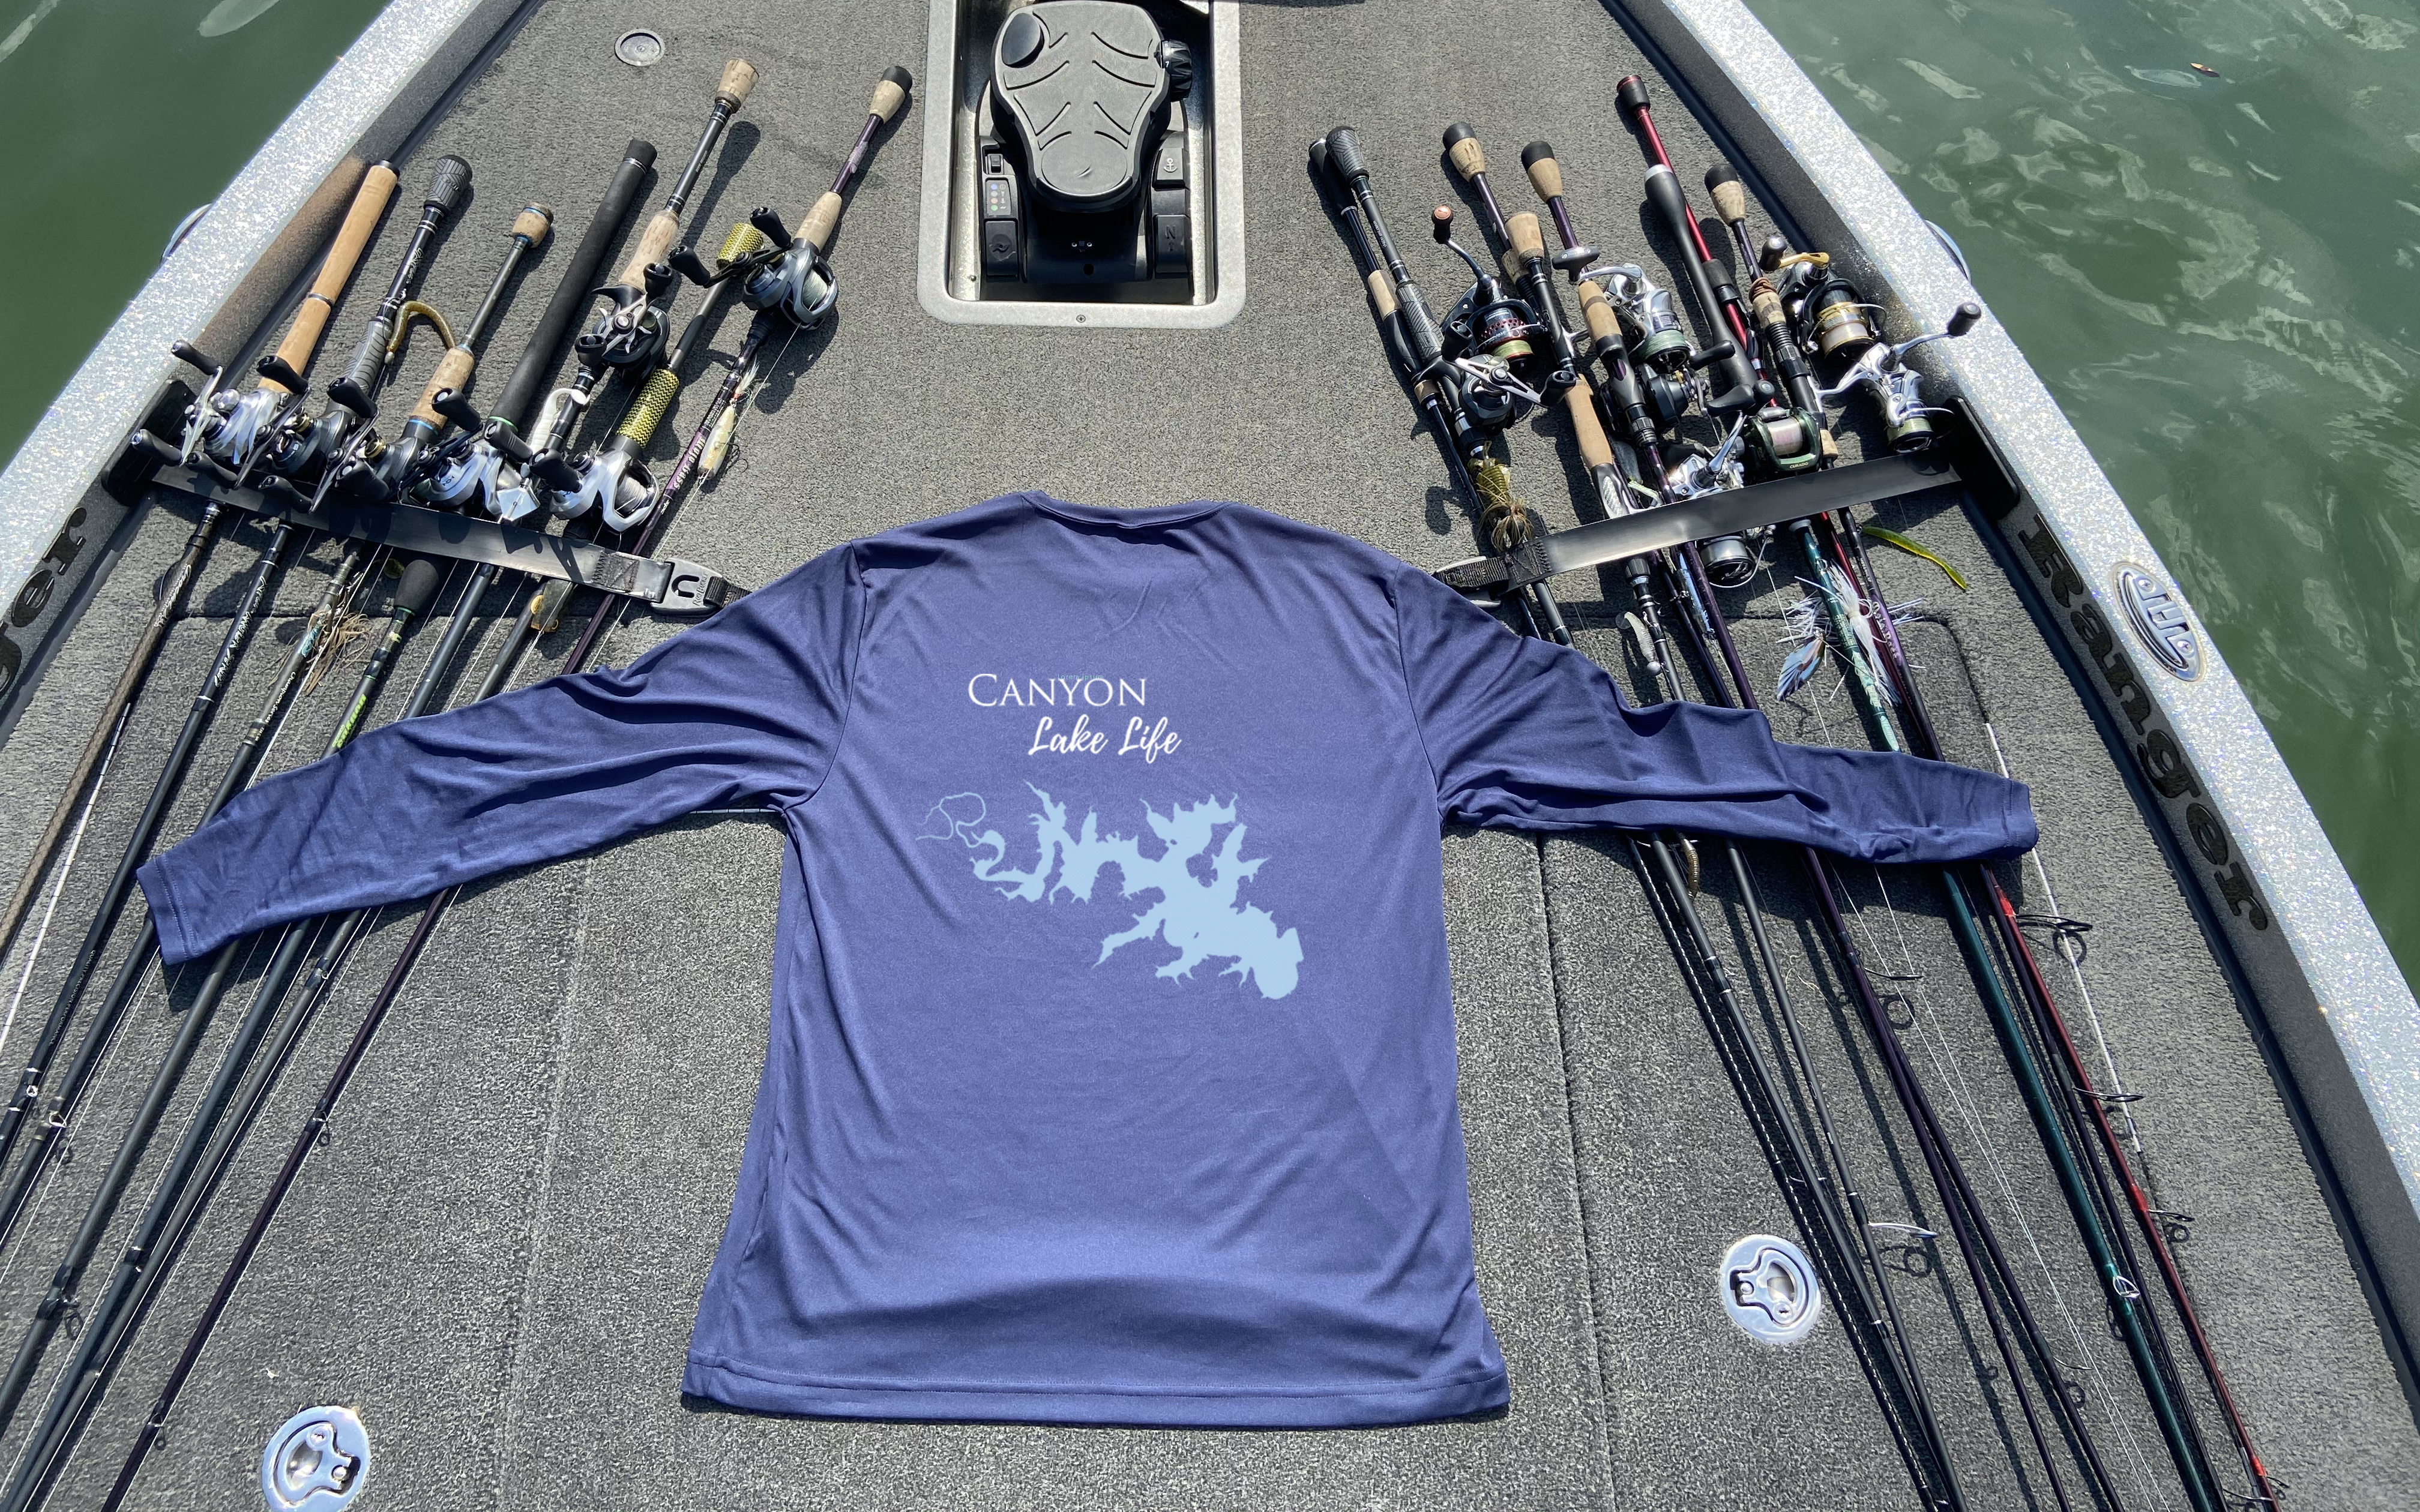 Canyon Lake Life Dri-fit Boating Shirt - Breathable Material- Men's Long Sleeve Moisture Wicking Tee - Texas Lake